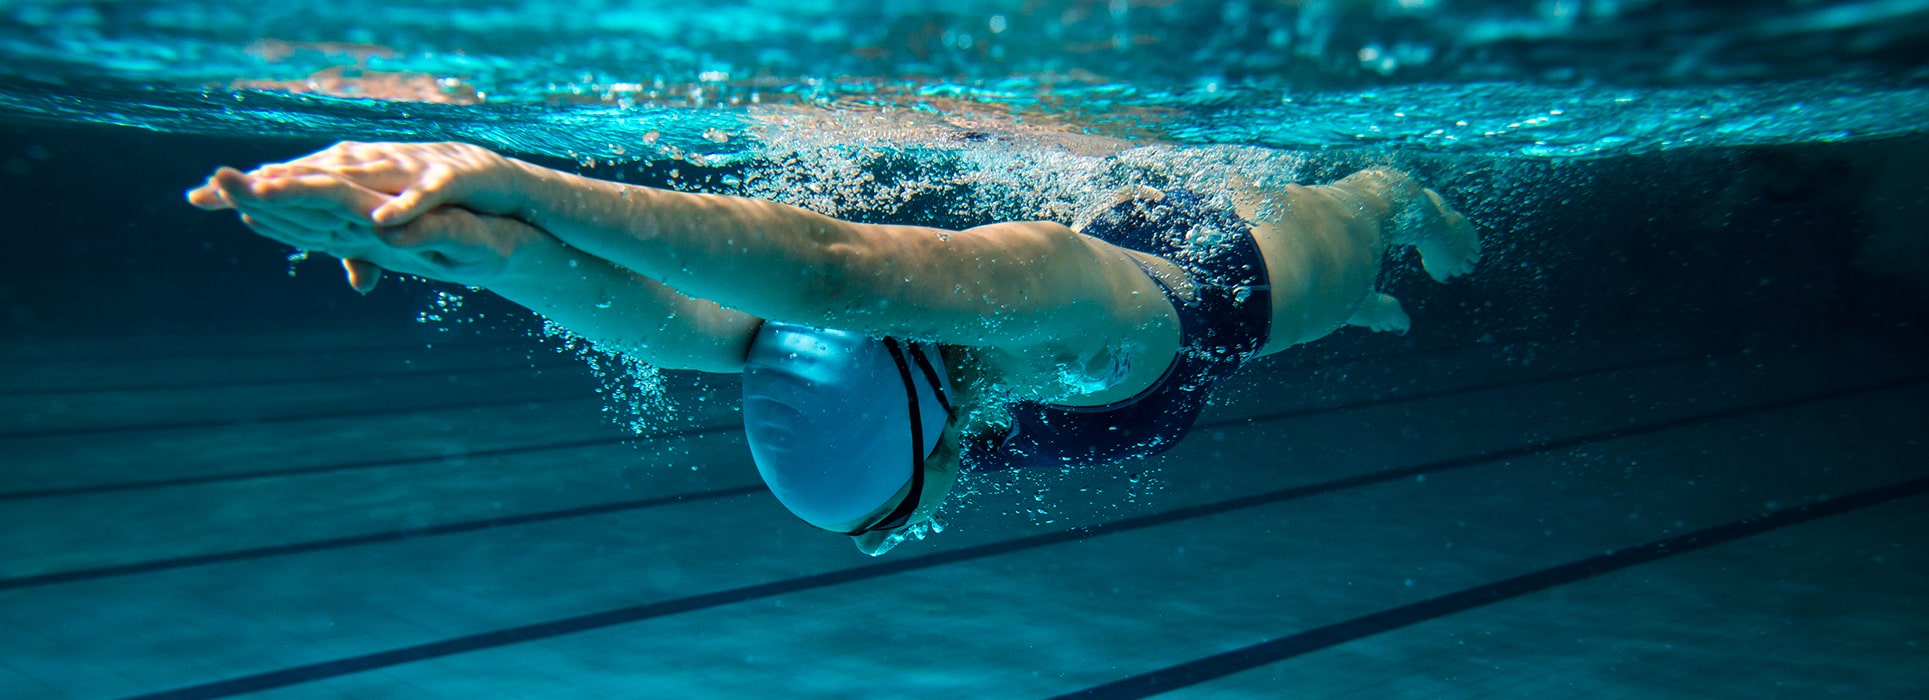 Angela Procida, la nuotatrice si racconta dopo le Paralimpiadi di Tokio